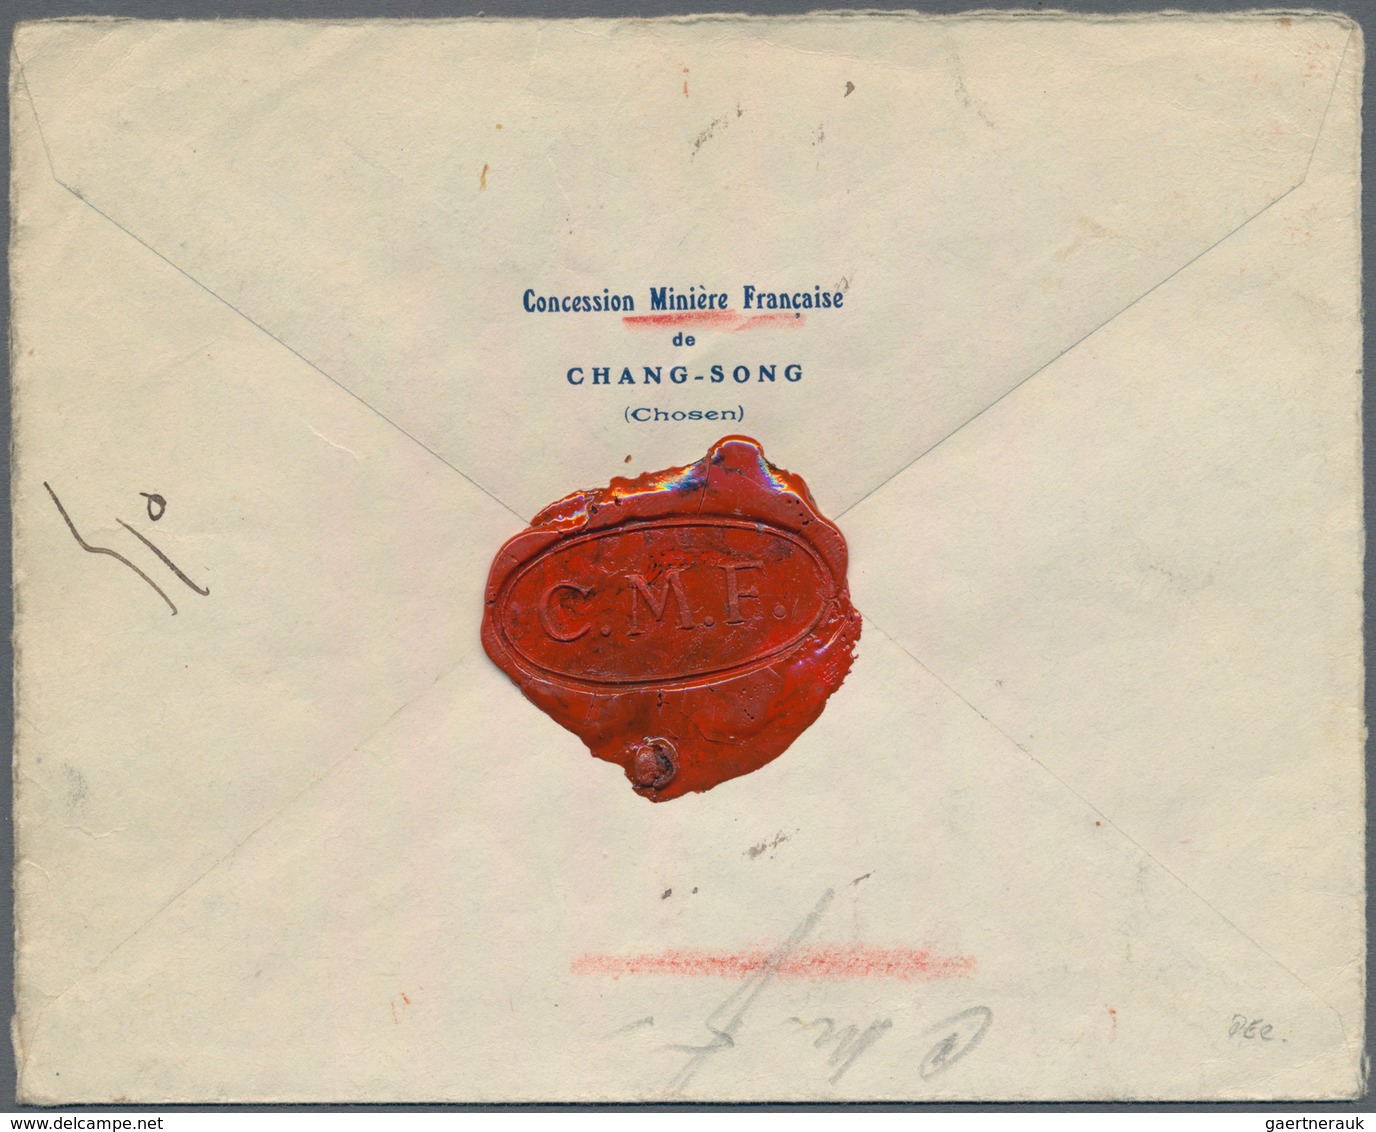 Japanische Post In Korea: 1899, Kiku 20 S. Canc. Korea Type "Daelanok 3.5.2" (May 2, 1914) To Regist - Militärpostmarken